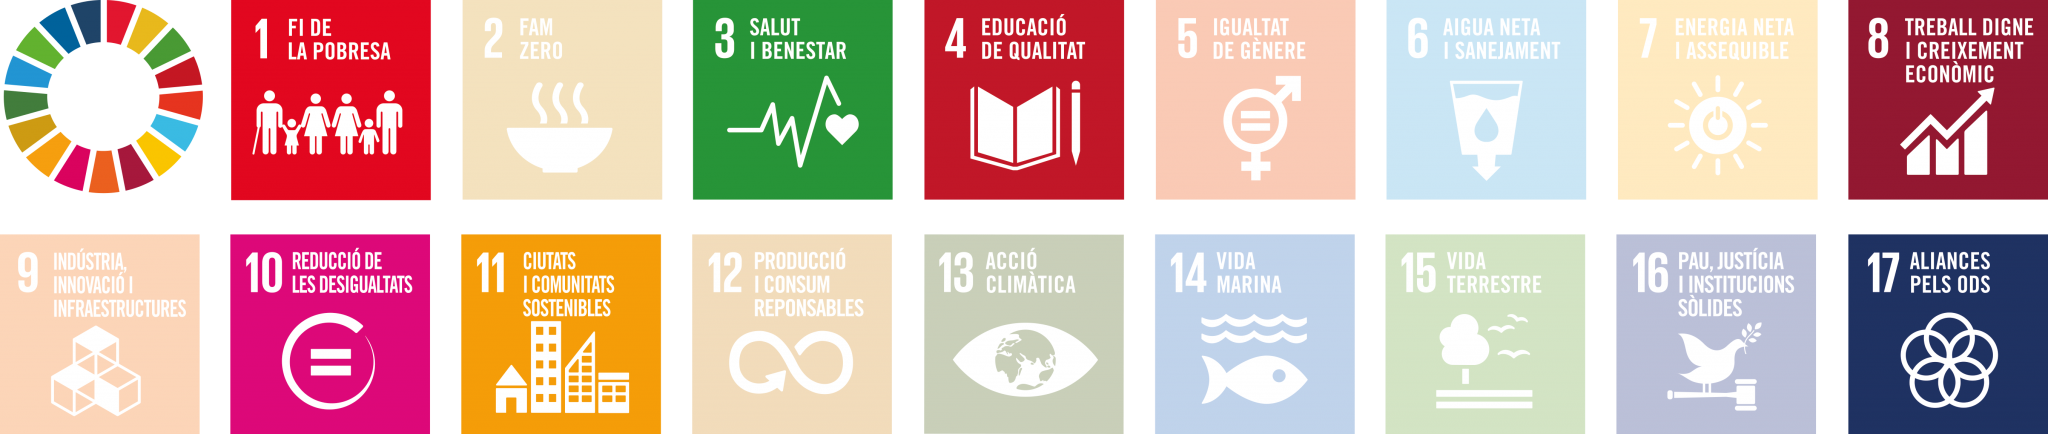 Objectius de Desenvolupament Sostenible (ODS) Agenda 2030